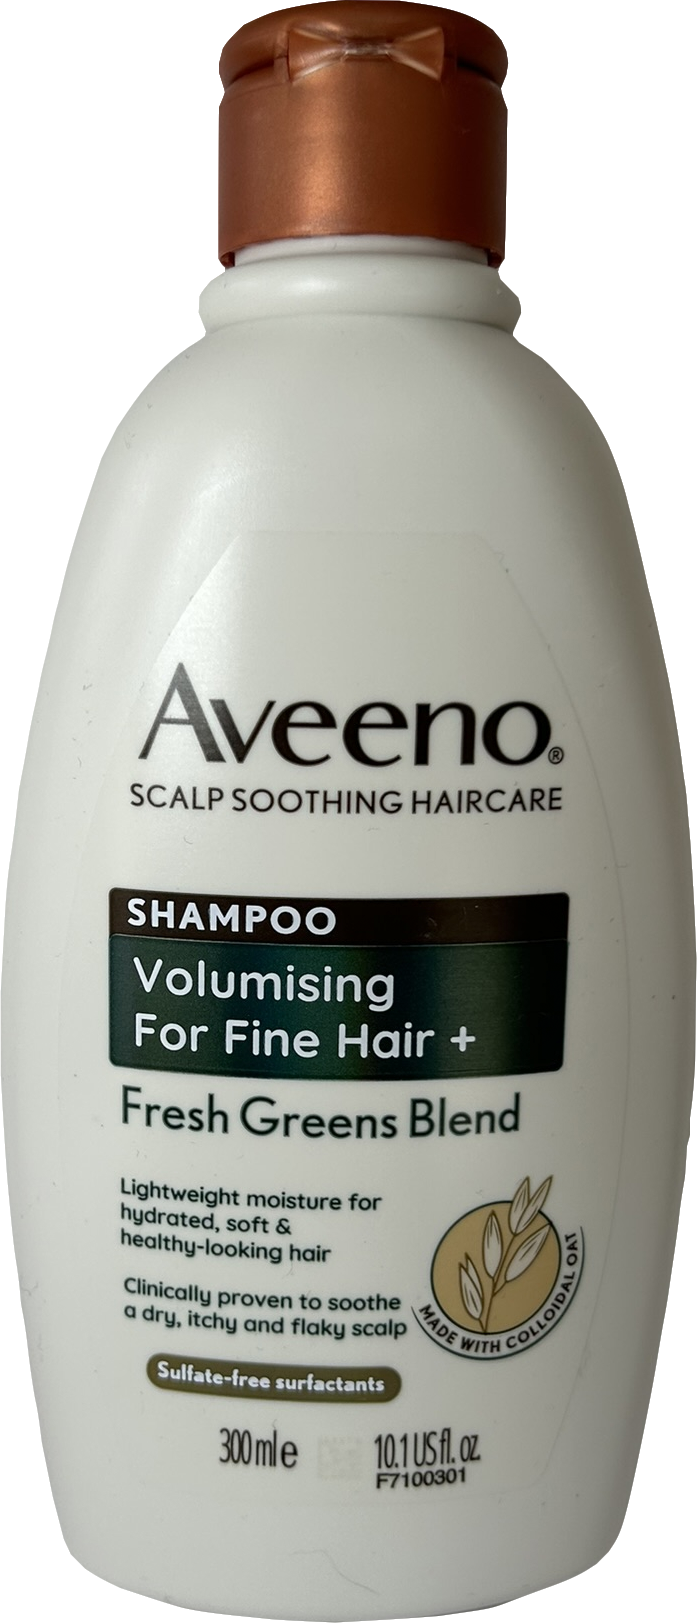 Aveeno Hair Volumising+ Fresh Greens Blend Shampoo 300ml